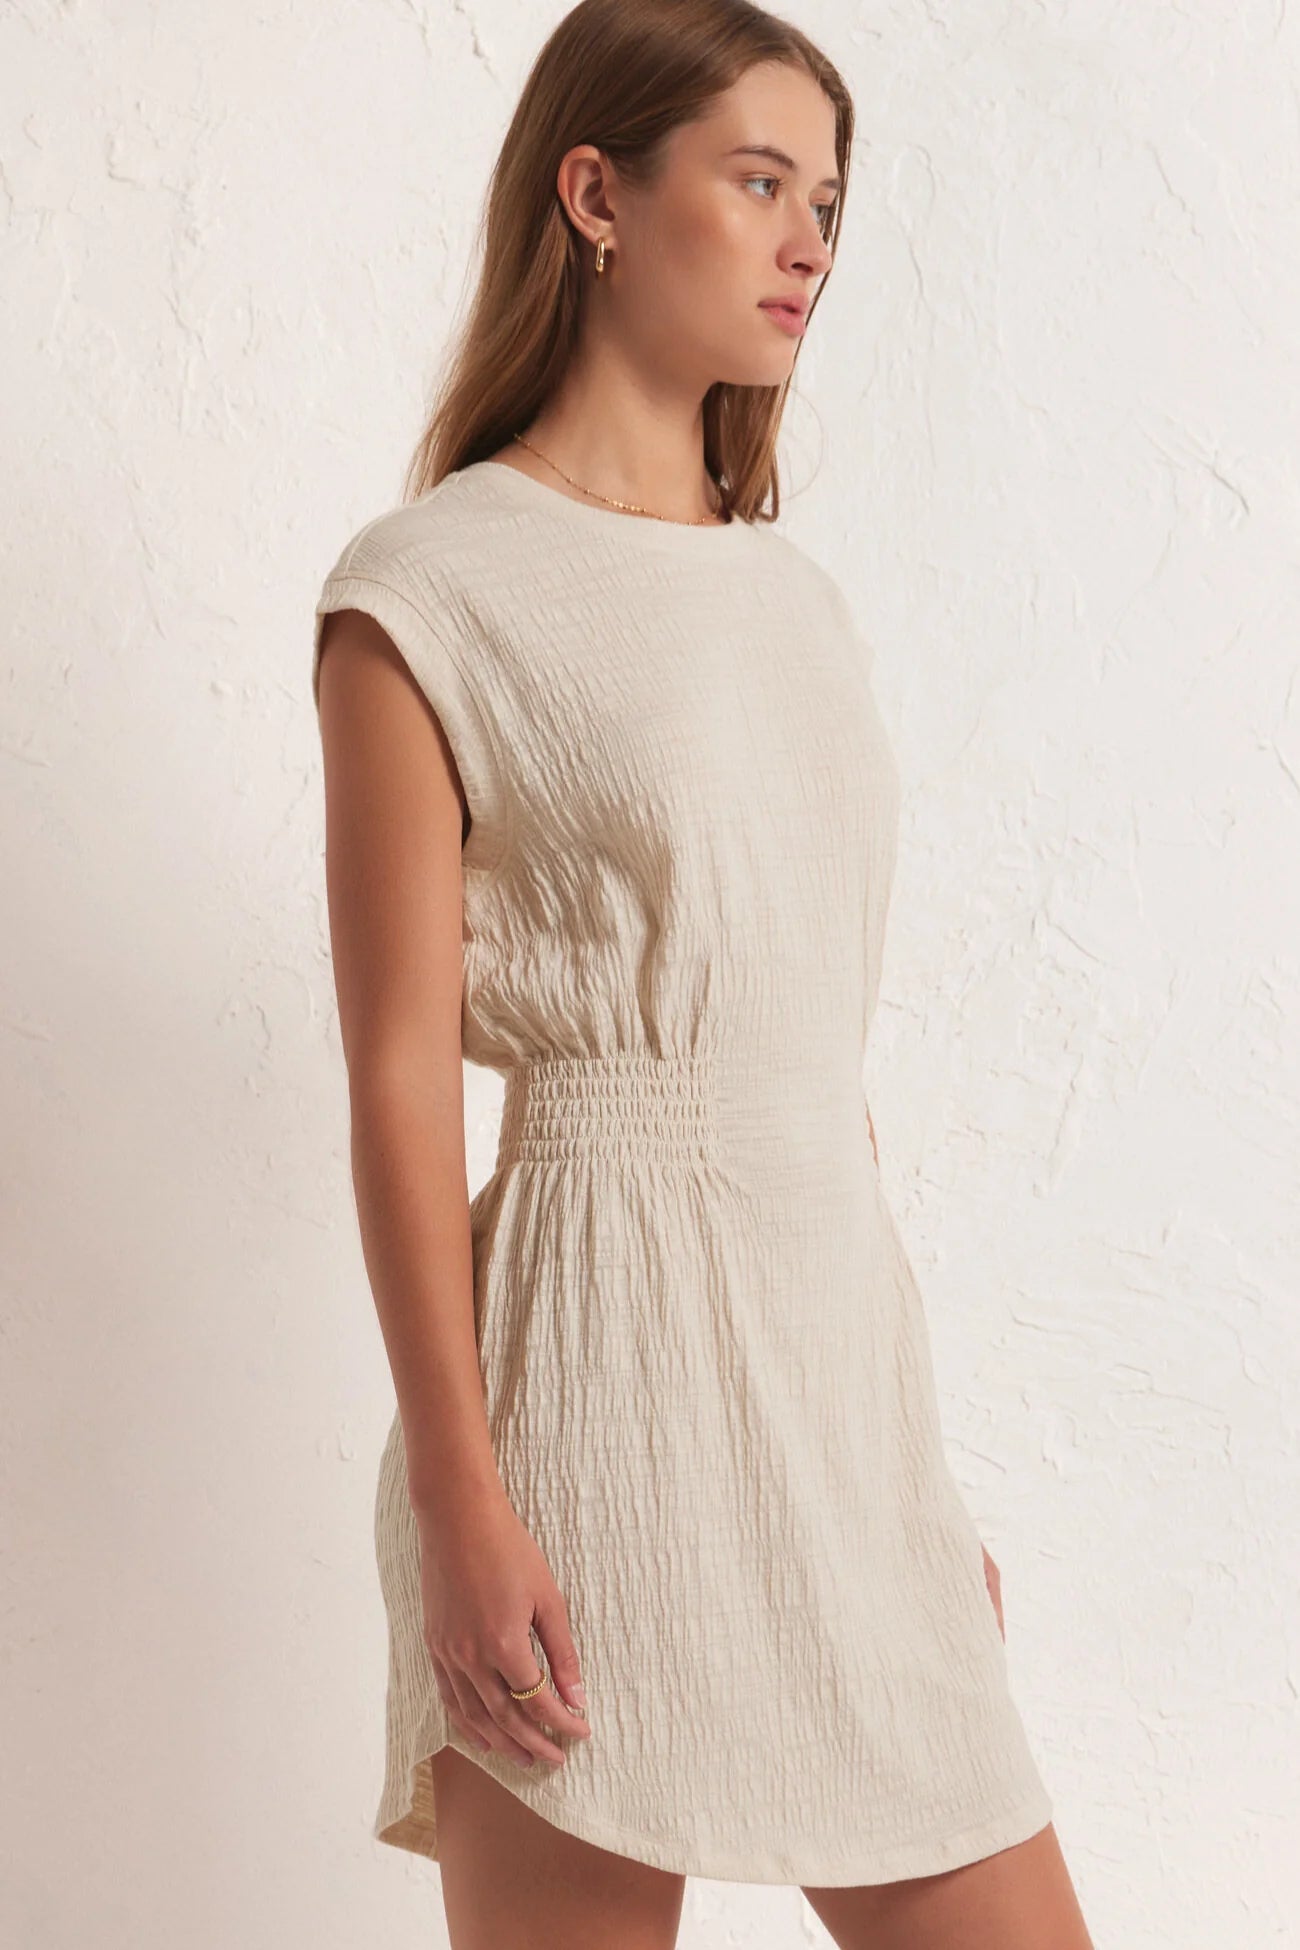 Whisper White Knit Dress | Z Supply